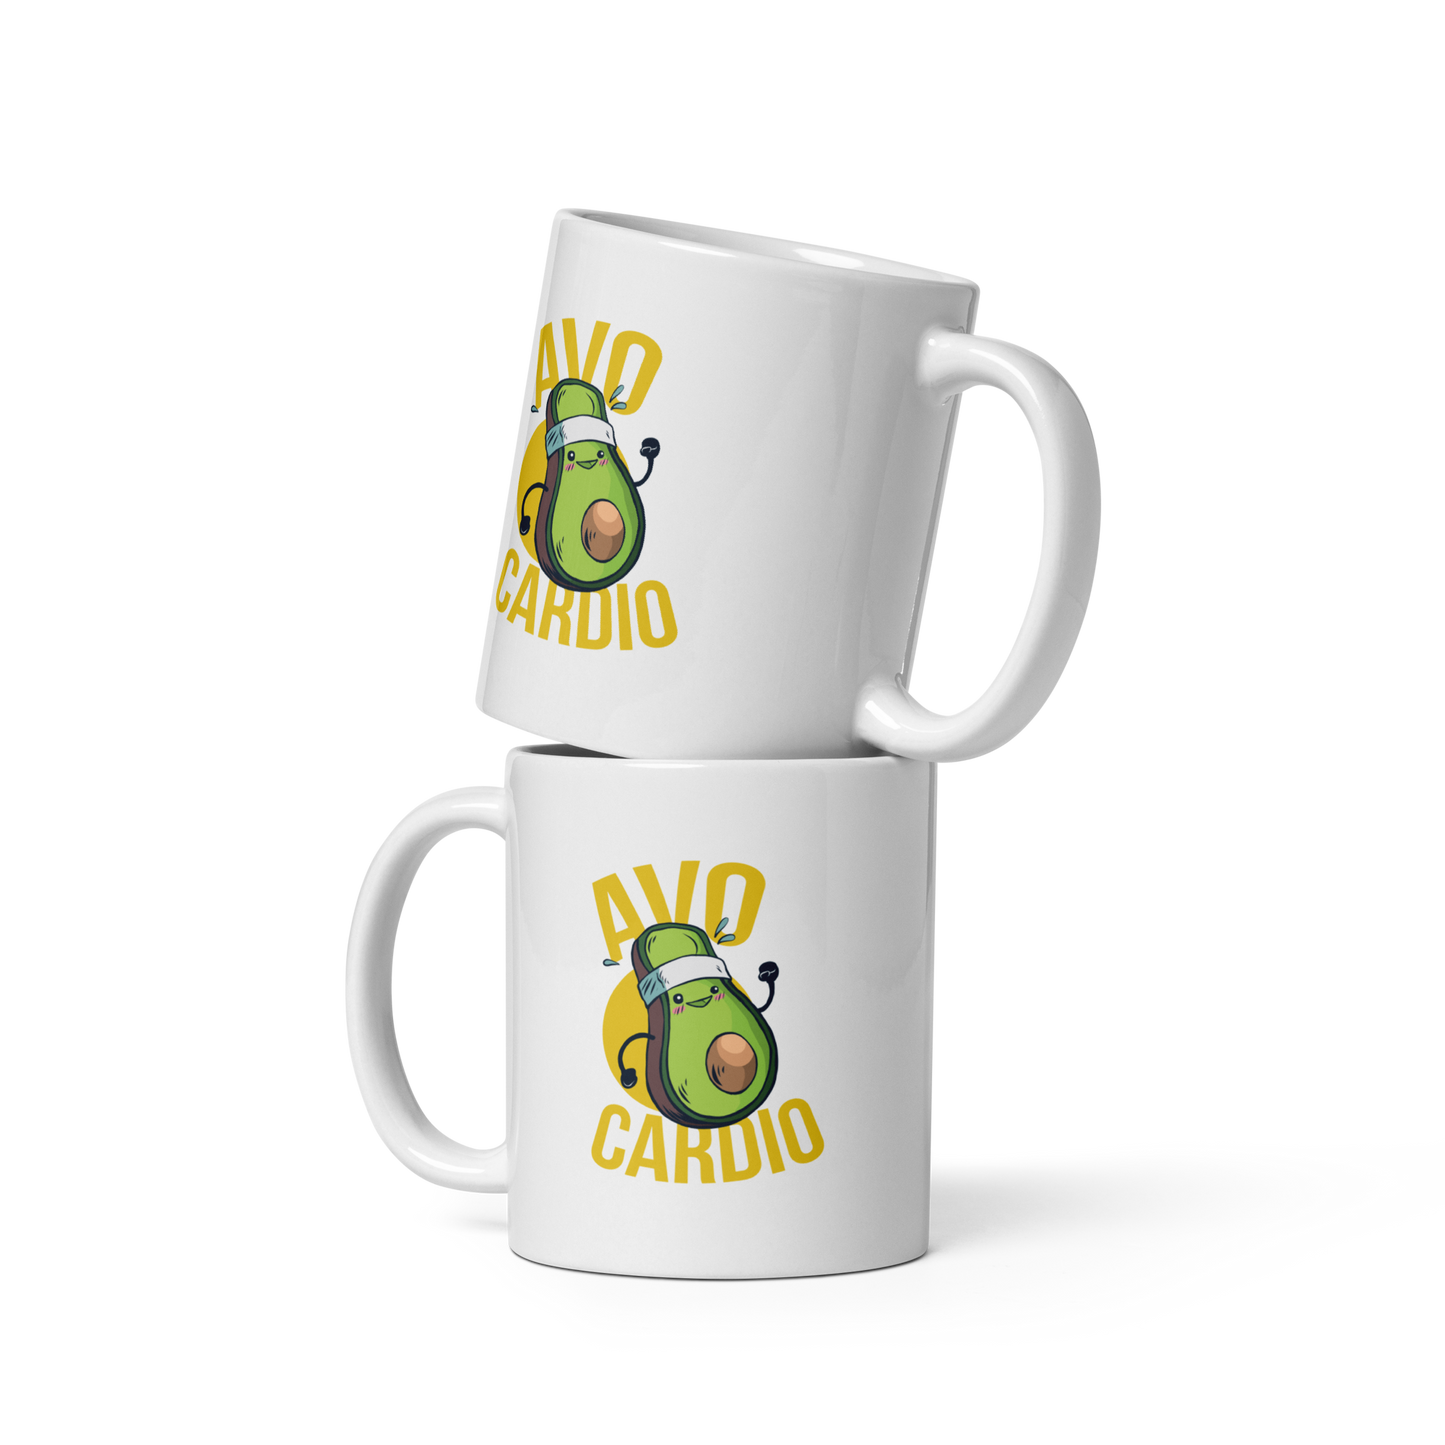 Avocardio | White glossy mug